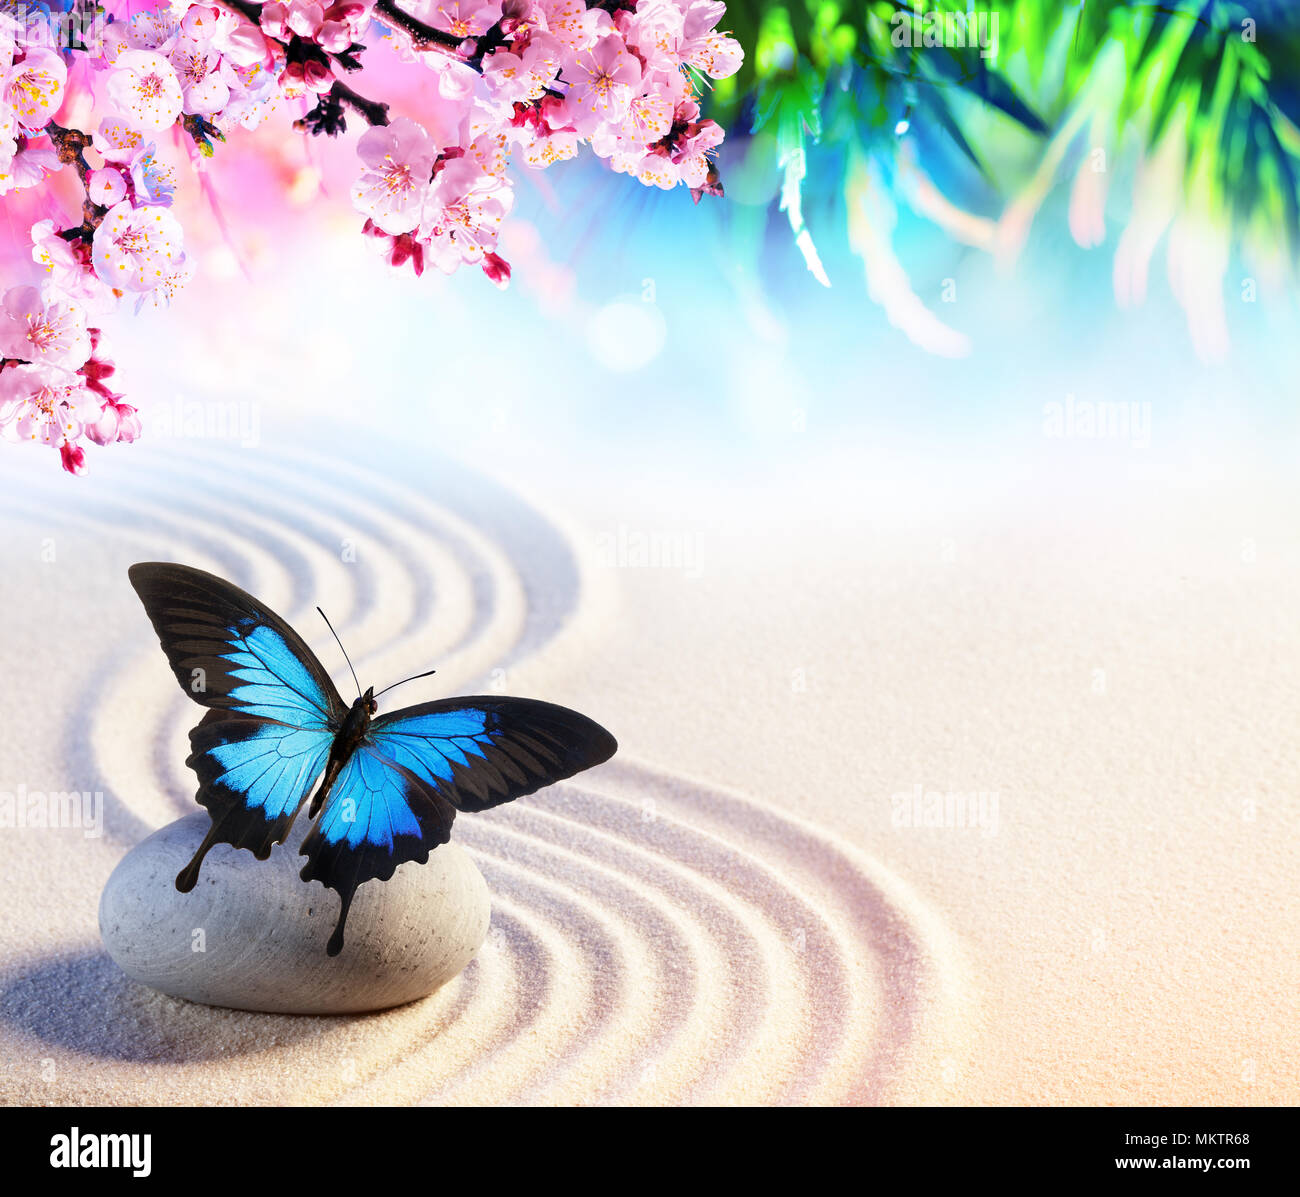 Butterfly In Japanese Rock Garden With Sakura Blossoms - Zen Concept Stock Photo